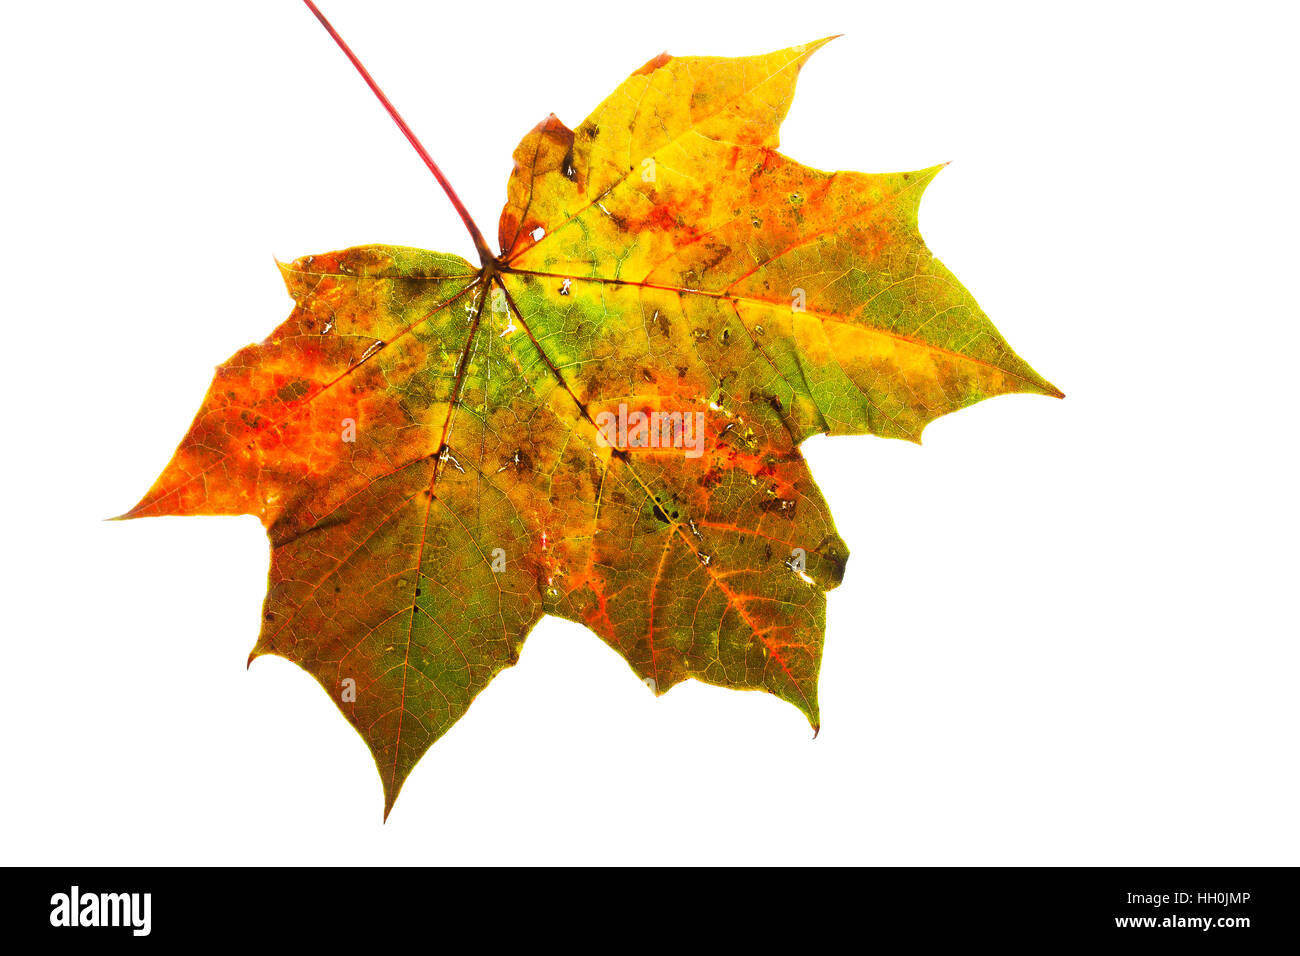 Spitz-Ahorn Acer Platanoides einzelne Blatt auf Lightbox Ringwood Hampshire England UK Oktober 2015 Stockfoto